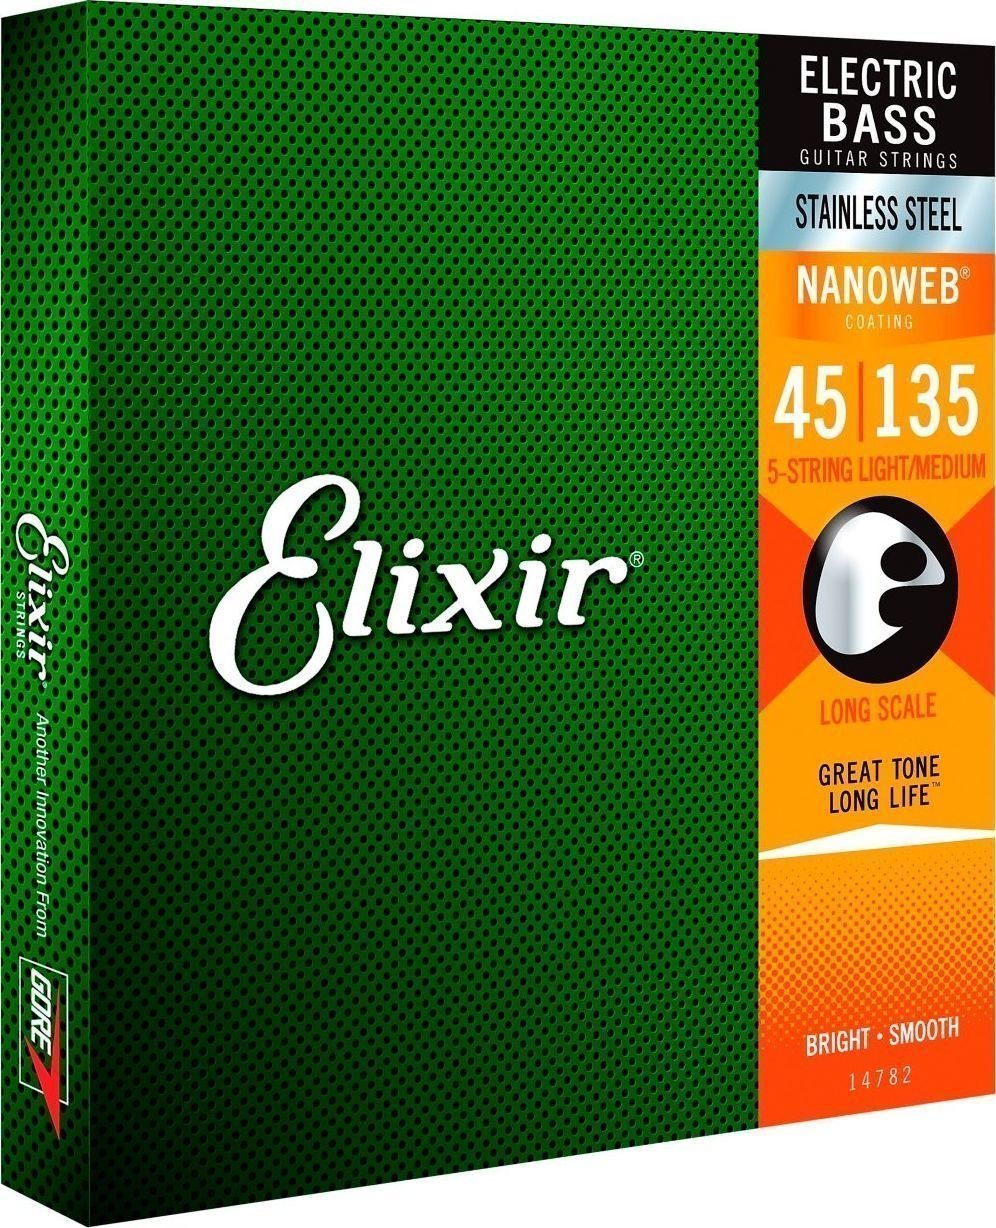 Bassguitar strings Elixir 14782 NanoWeb Light/Medium 45-135